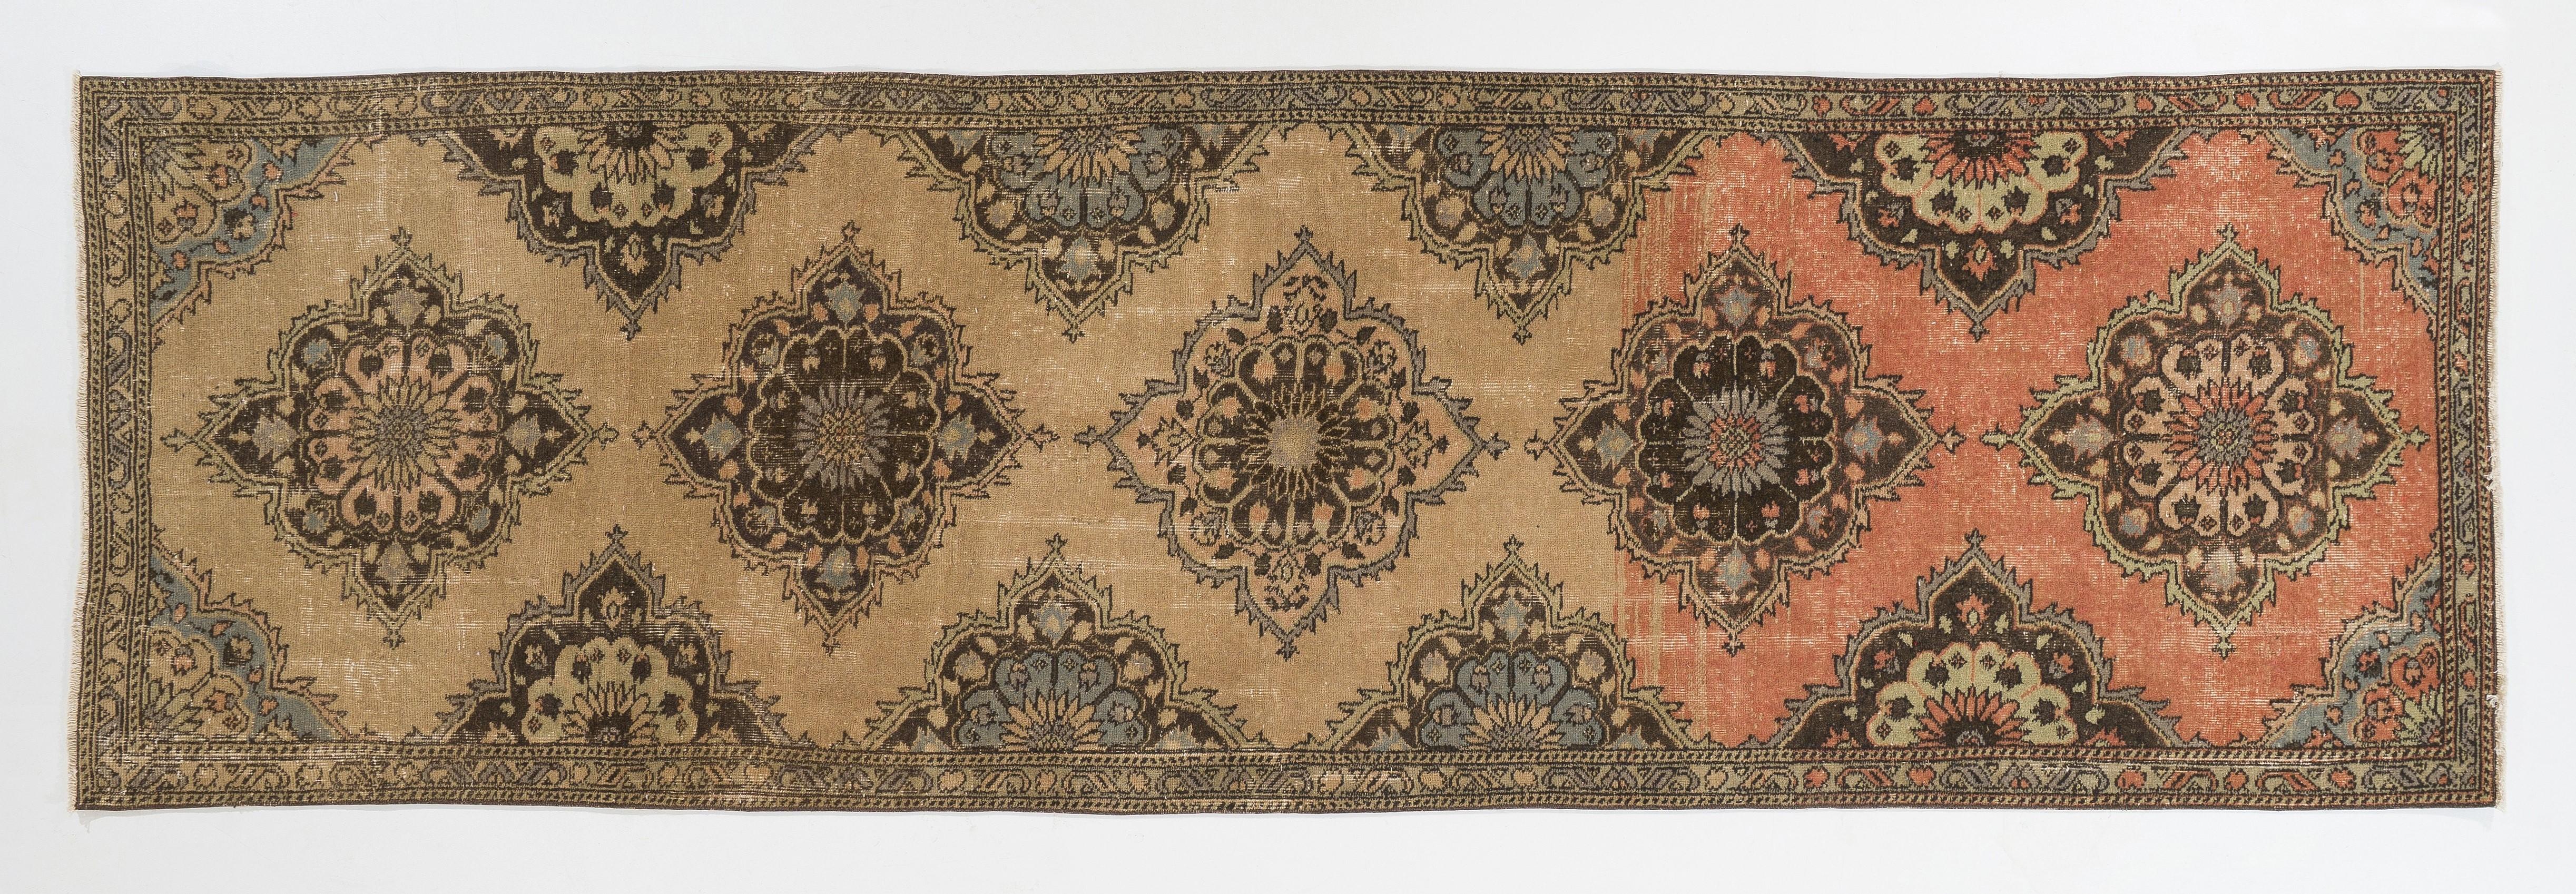 3.6x11.7 Ft Hand-Knotted Turkish Oushak Wool Runner Rug. Vintage Corridor Carpet For Sale 1